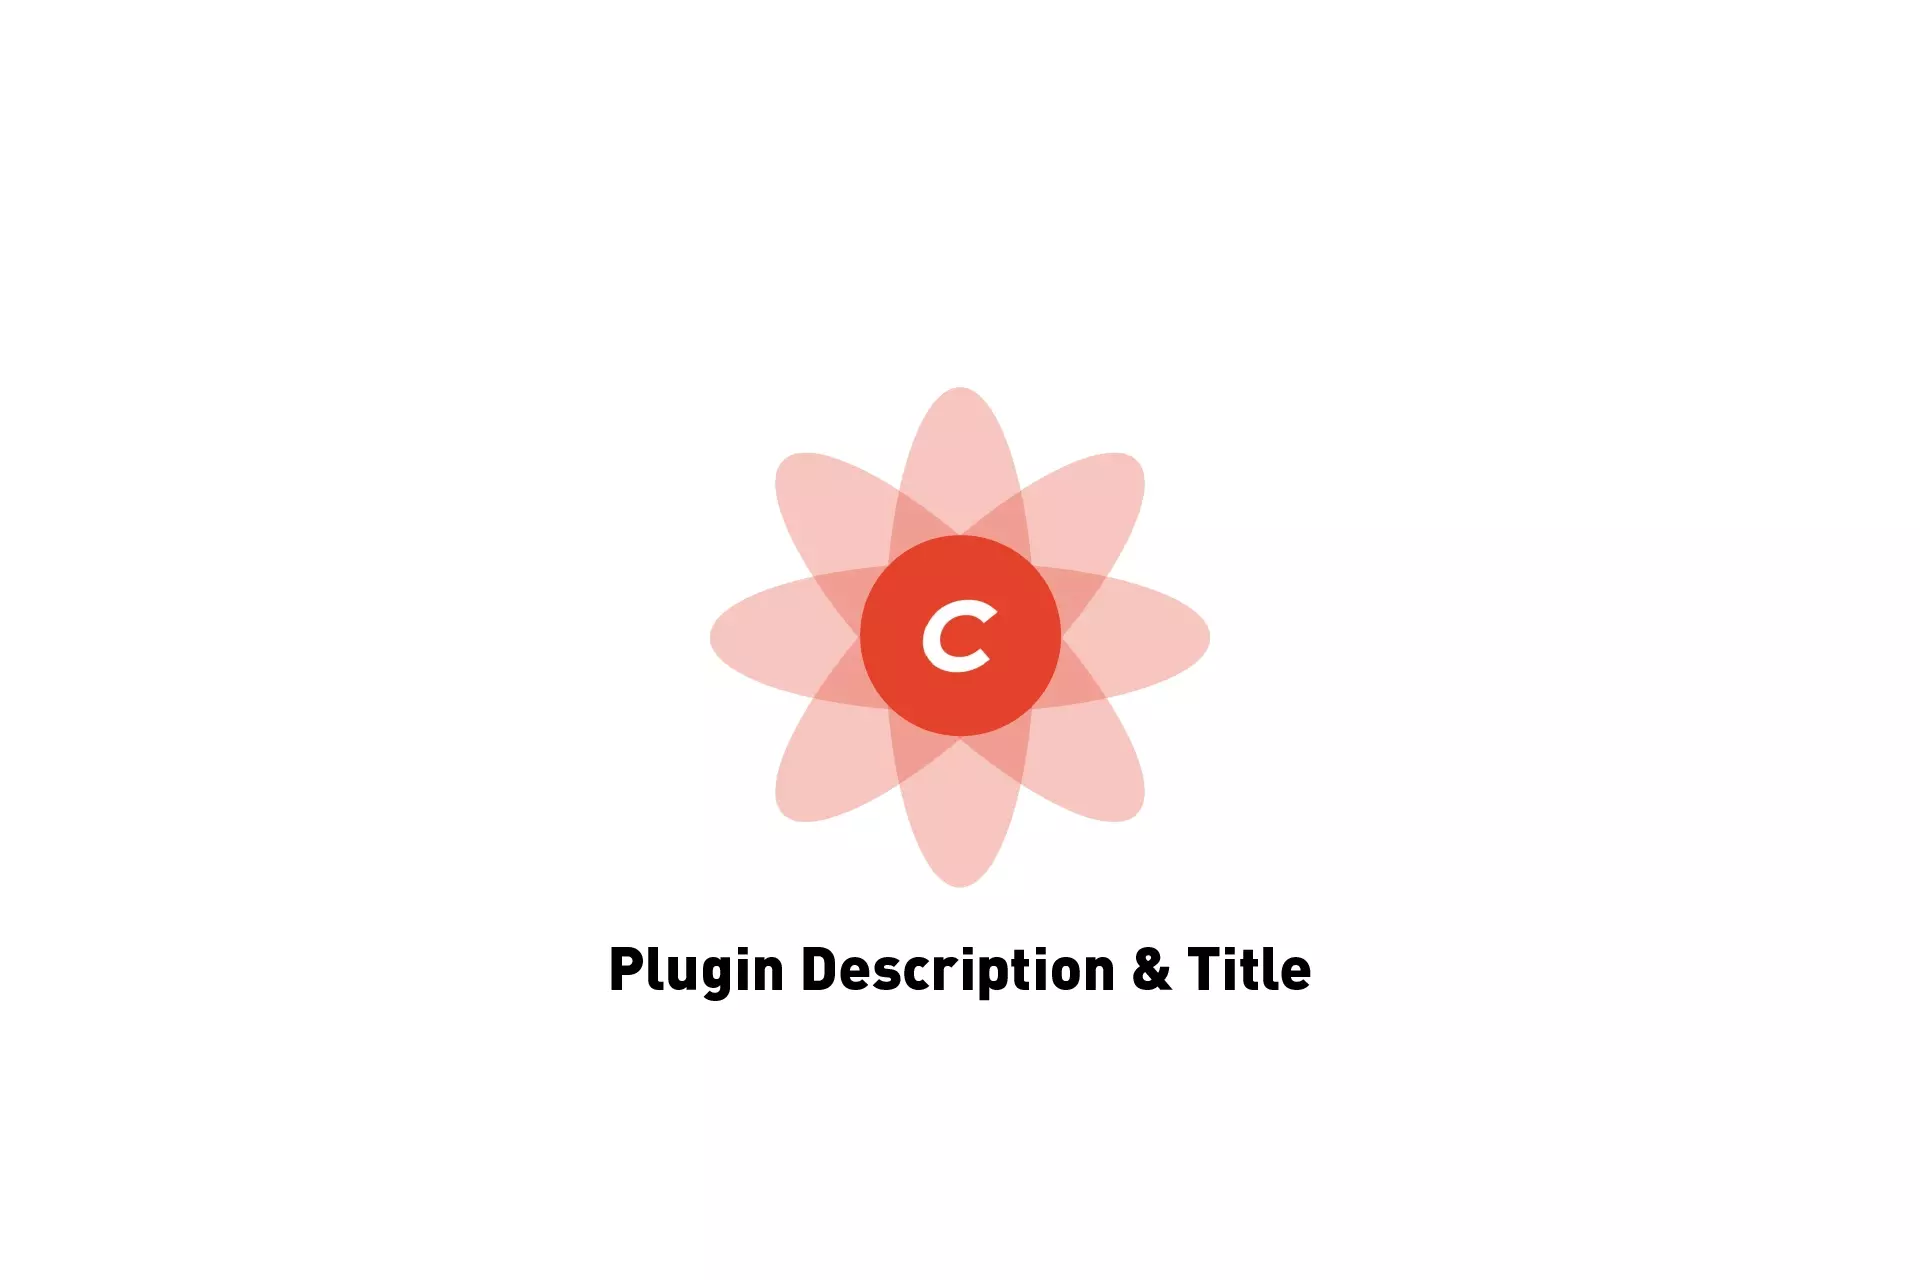 A flower that represents Craft CMS, beneath it sits the text "Plugin Description & Title."